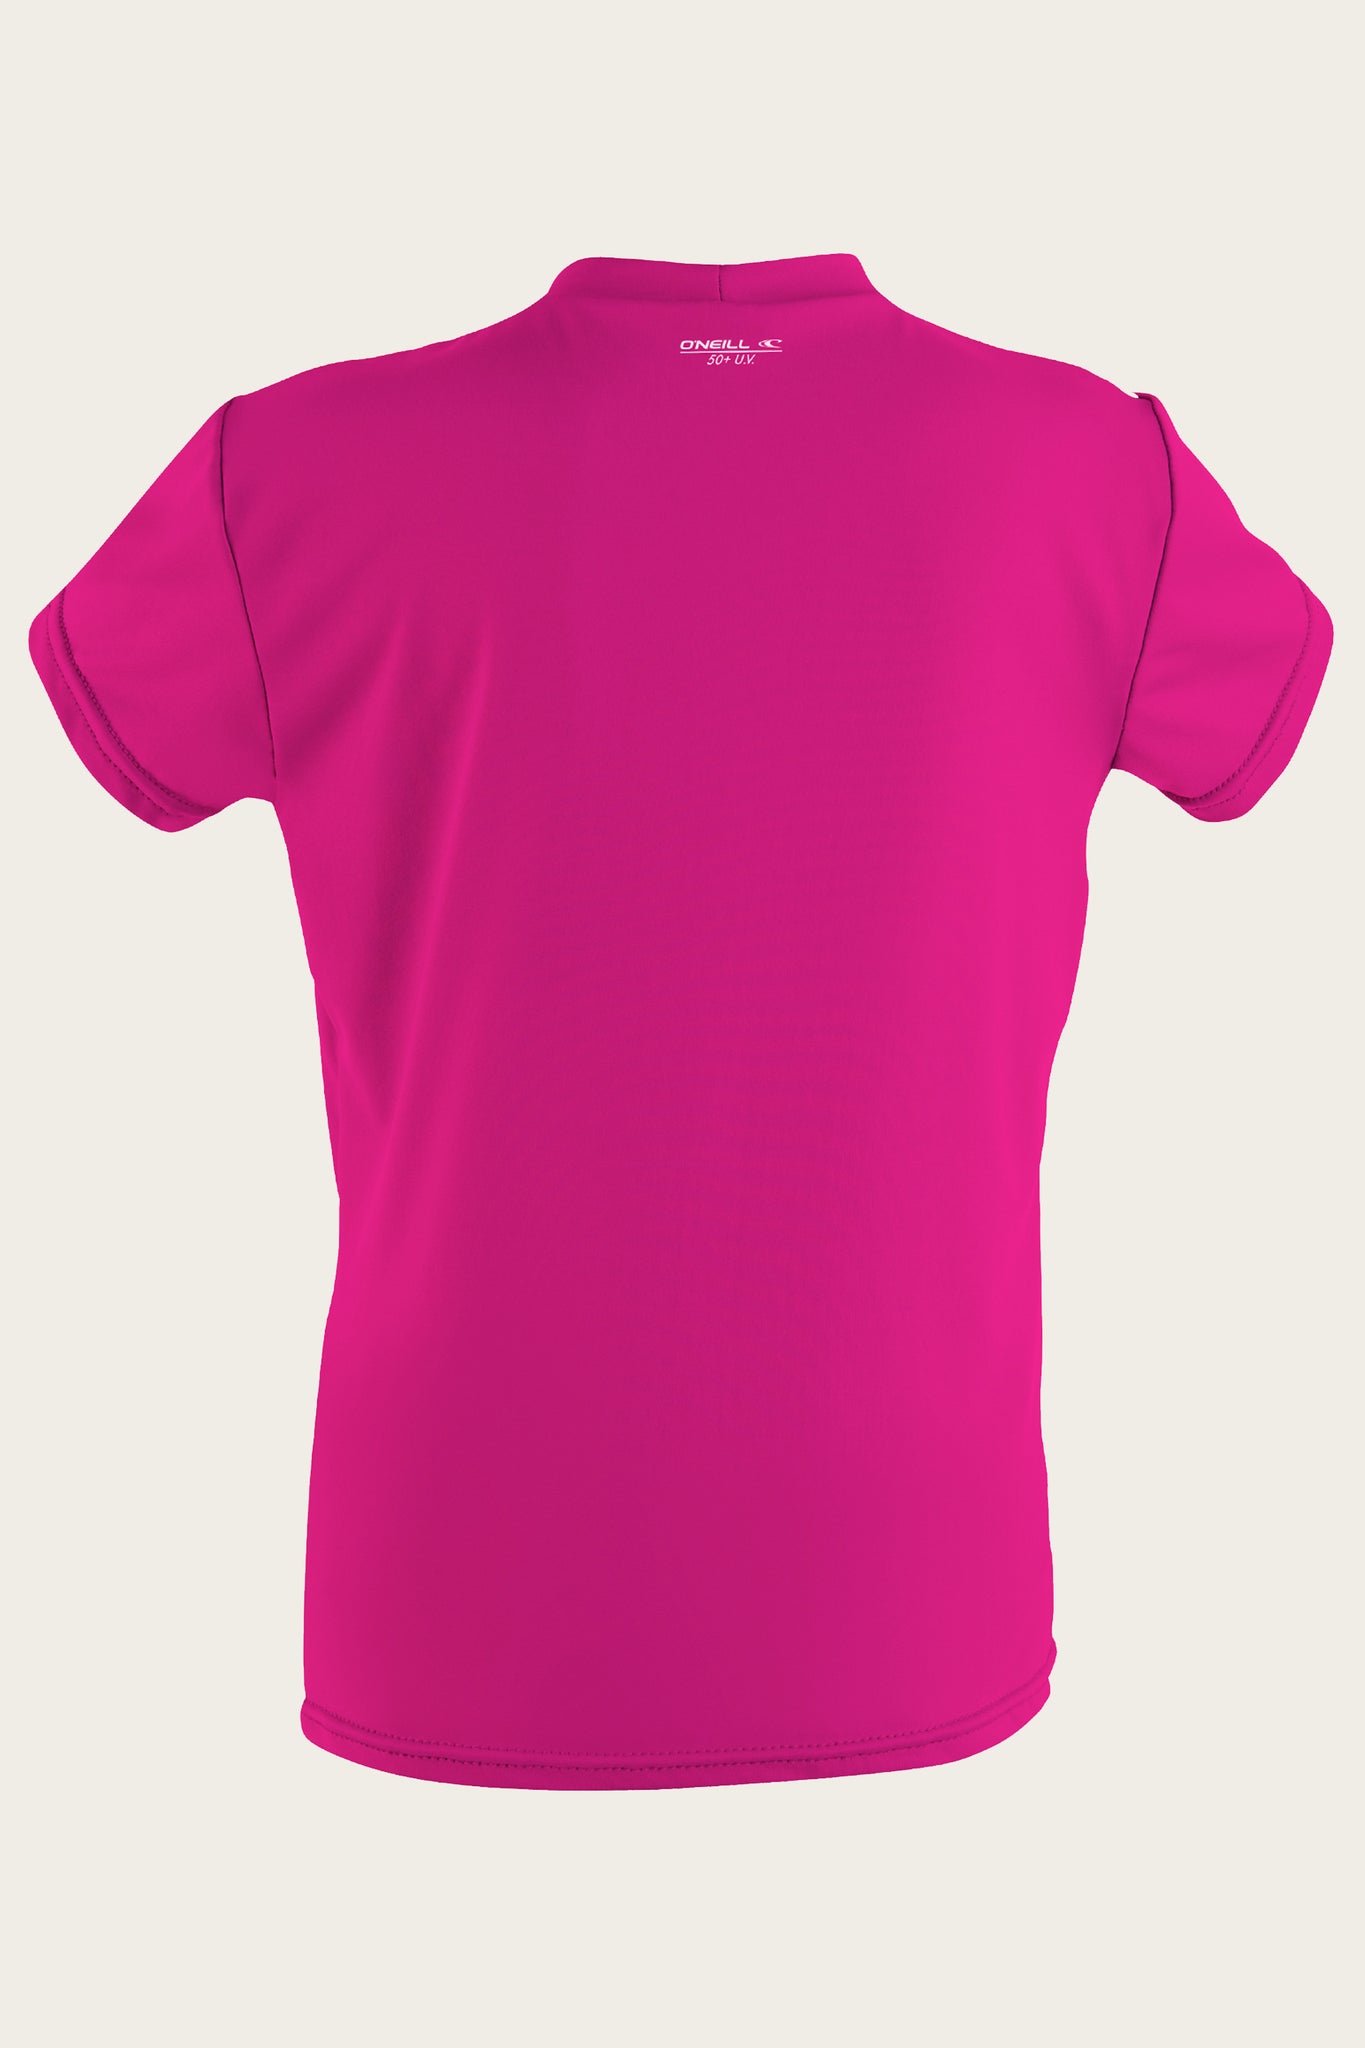 Toddler O'Zone S/S Sun Shirt - Fox Pink | O'Neill